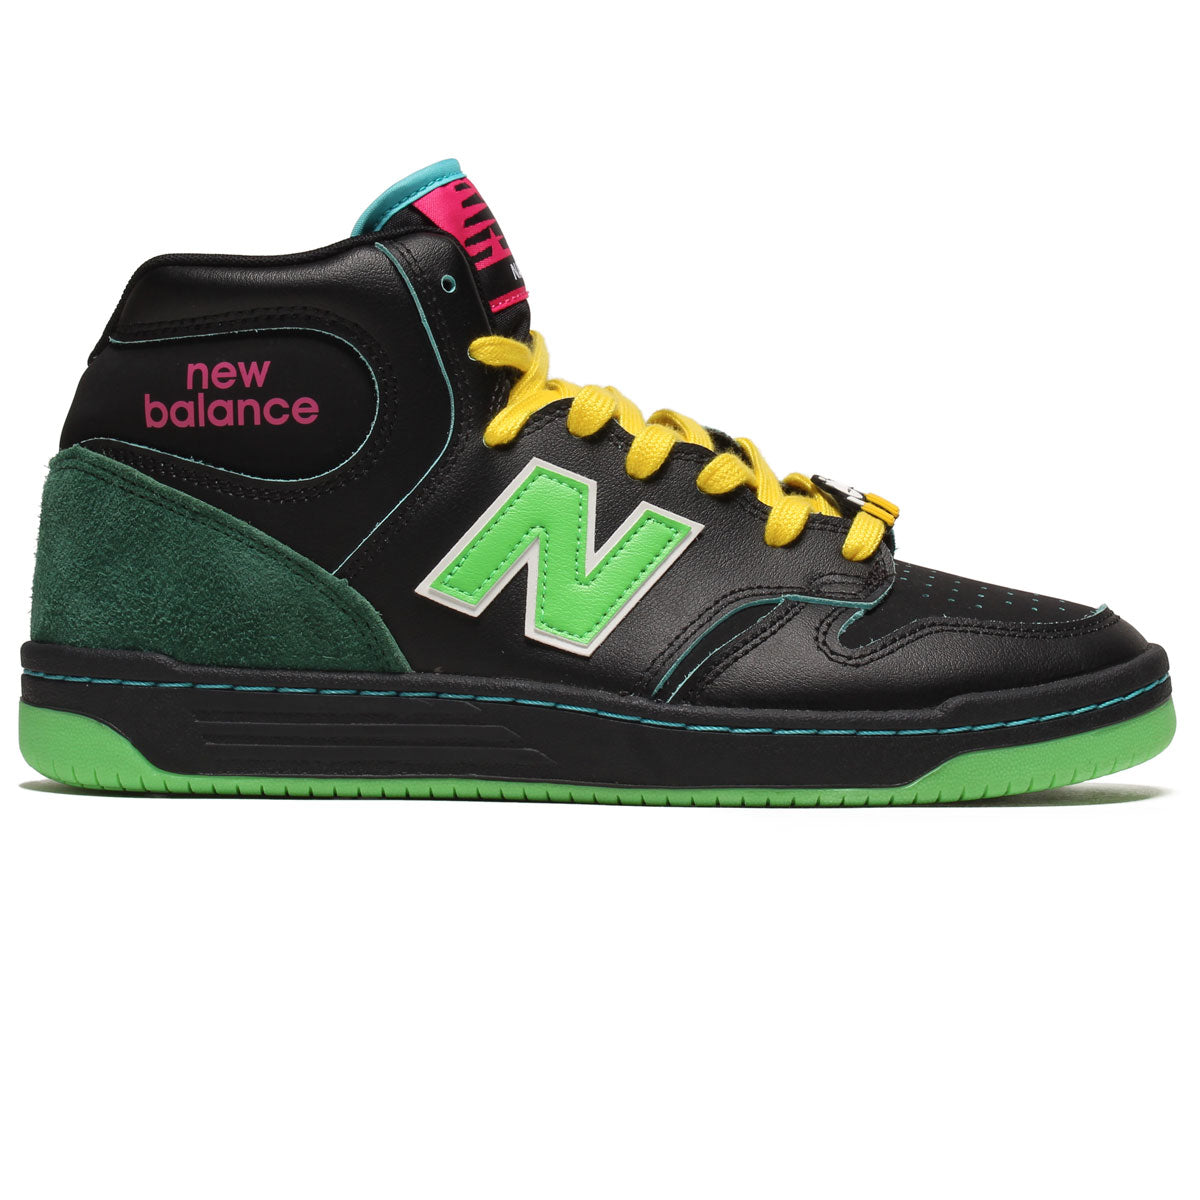 New Balance x Natas 480 High Shoes - Black/Green/Pink image 1